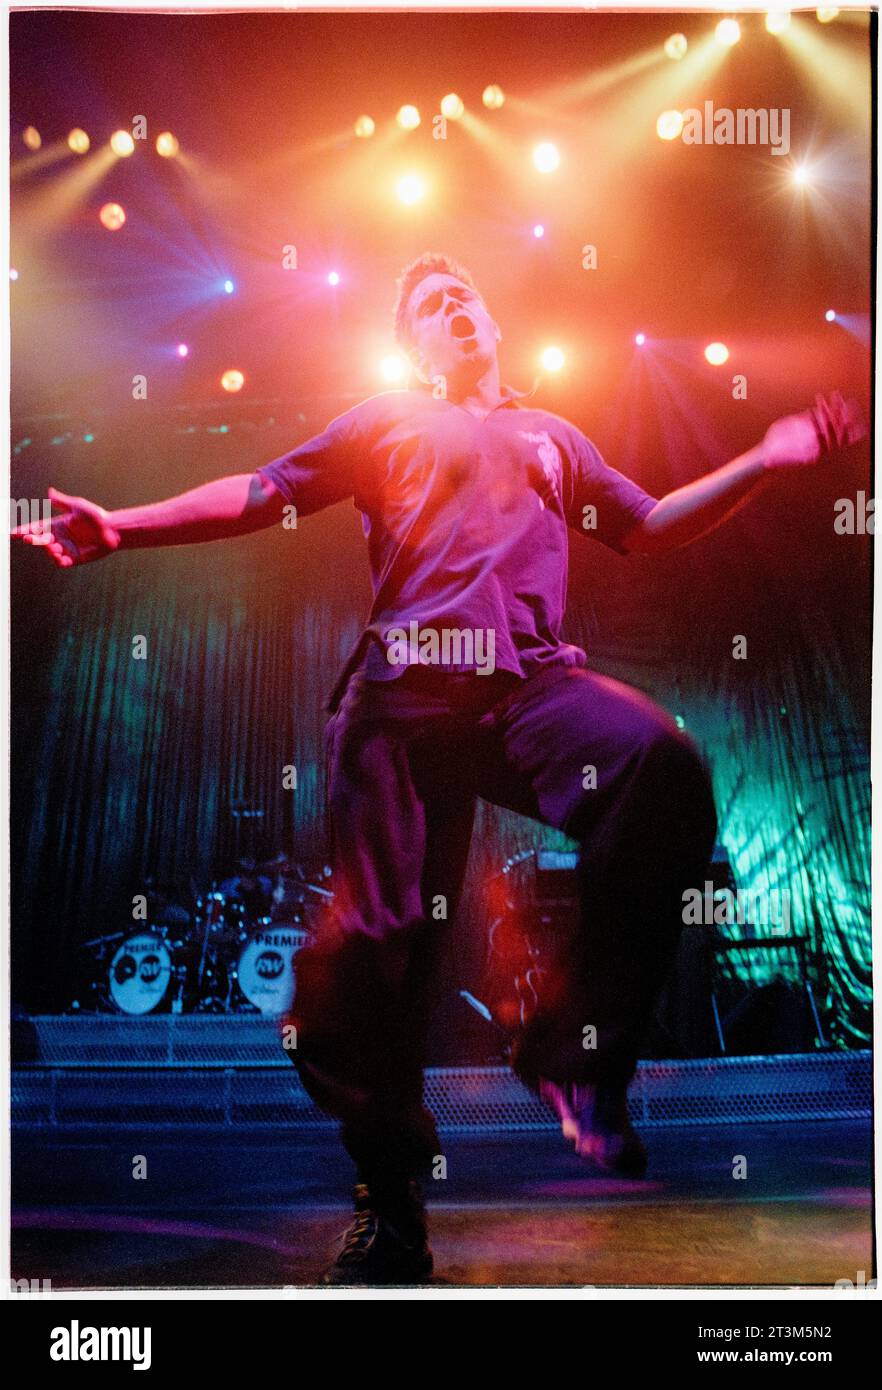 ROBBIE WILLIAMS, CARDIFF, 1999: Robbie Williams Dancing on His Ego has Landing Tour in Cardiff International Arena CIA am 4. Februar 1999. Foto: Rob Watkins Stockfoto